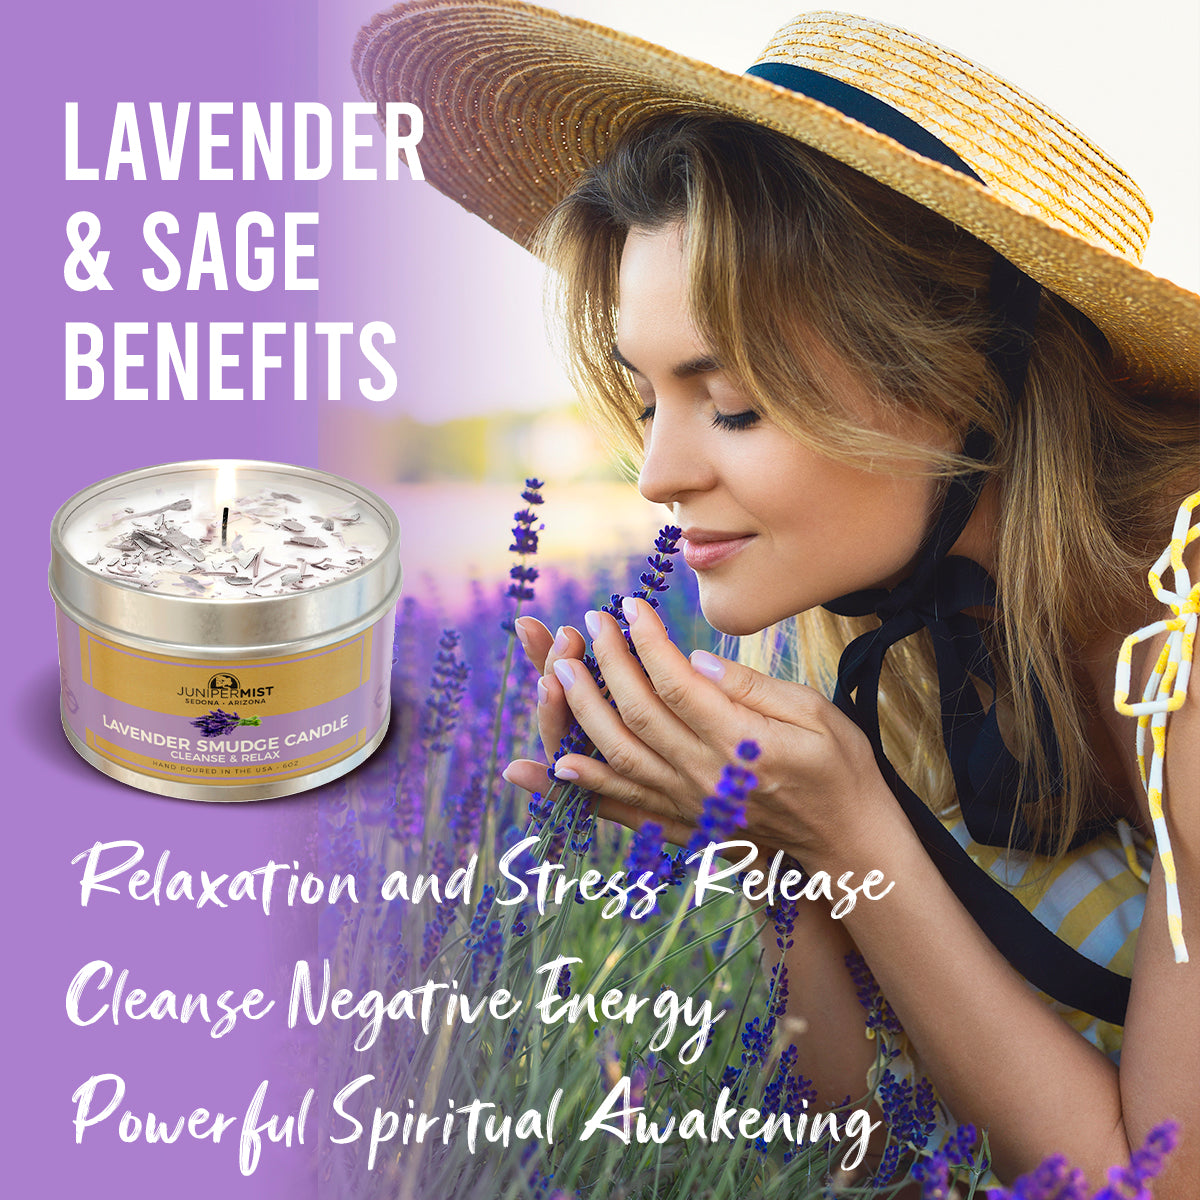 Lavender Smudge Candle w/White Sage Leaf